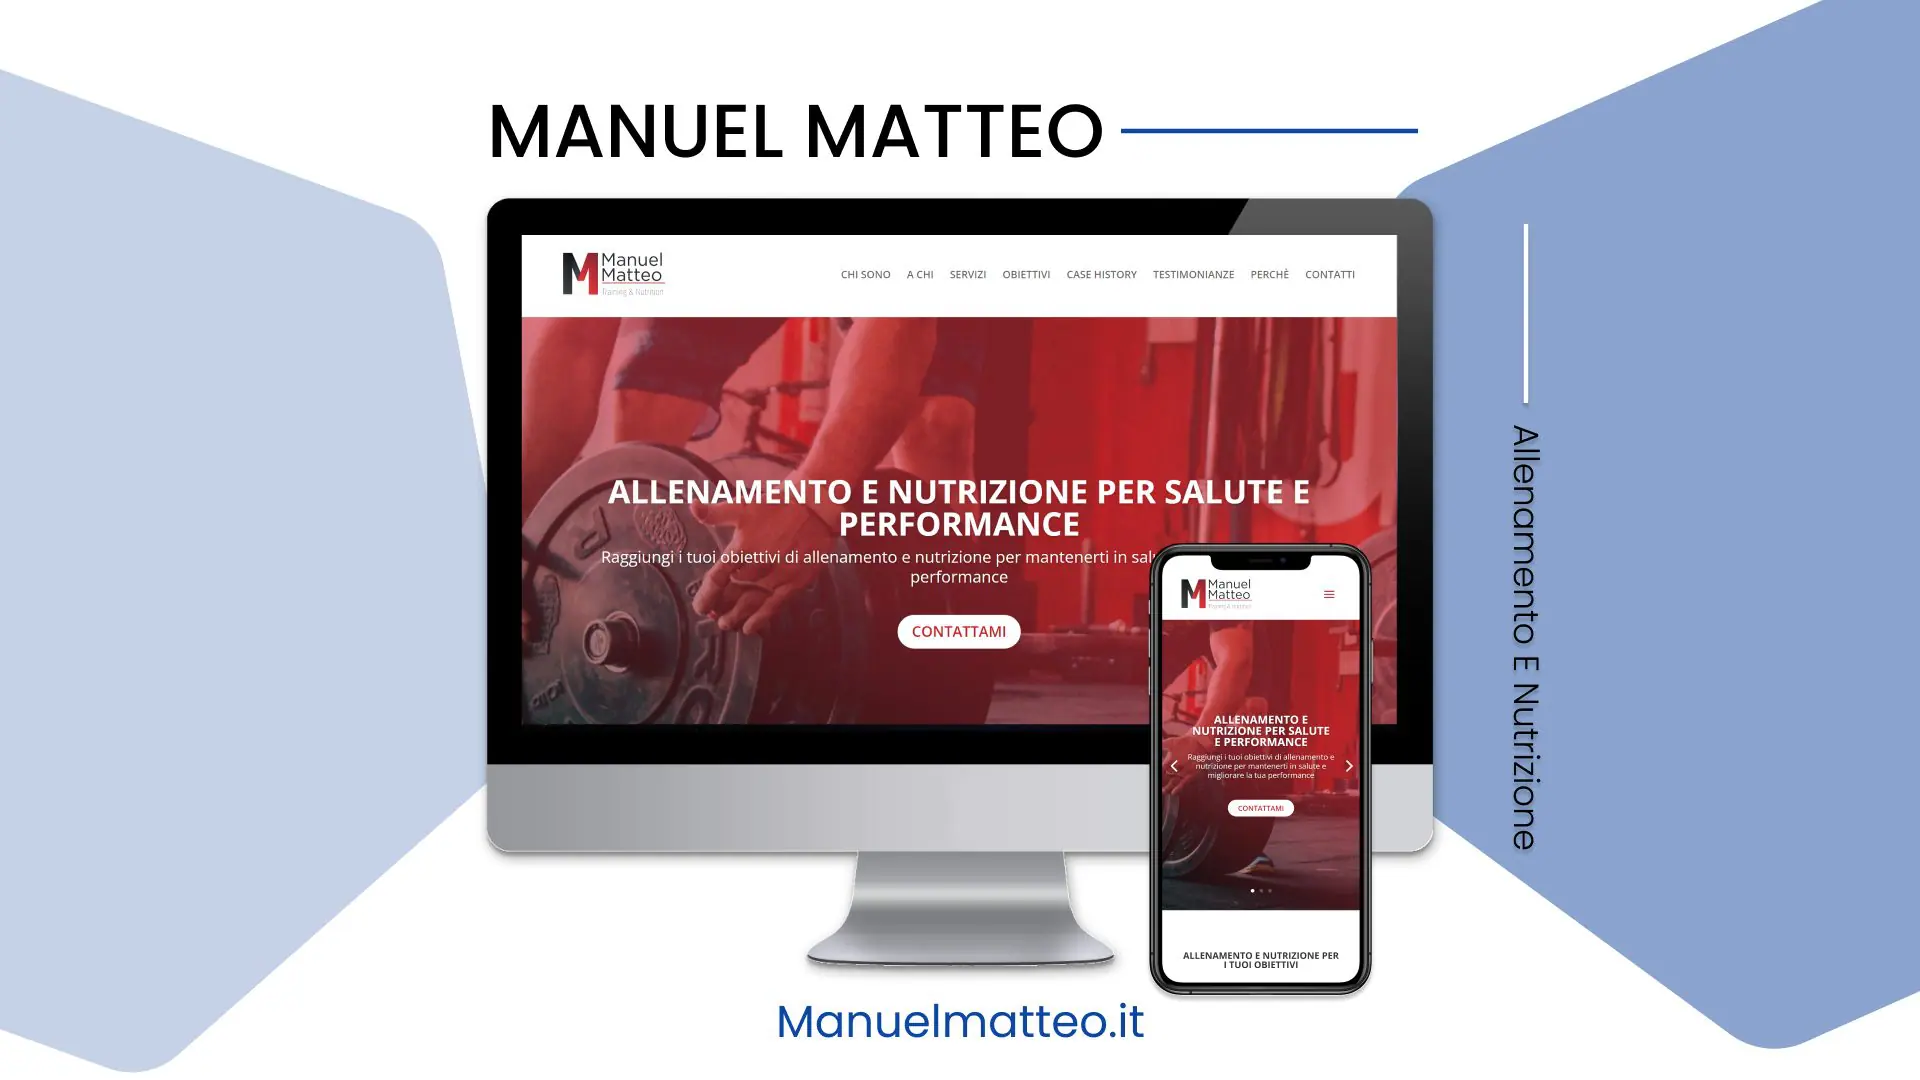 Manuel Matteo